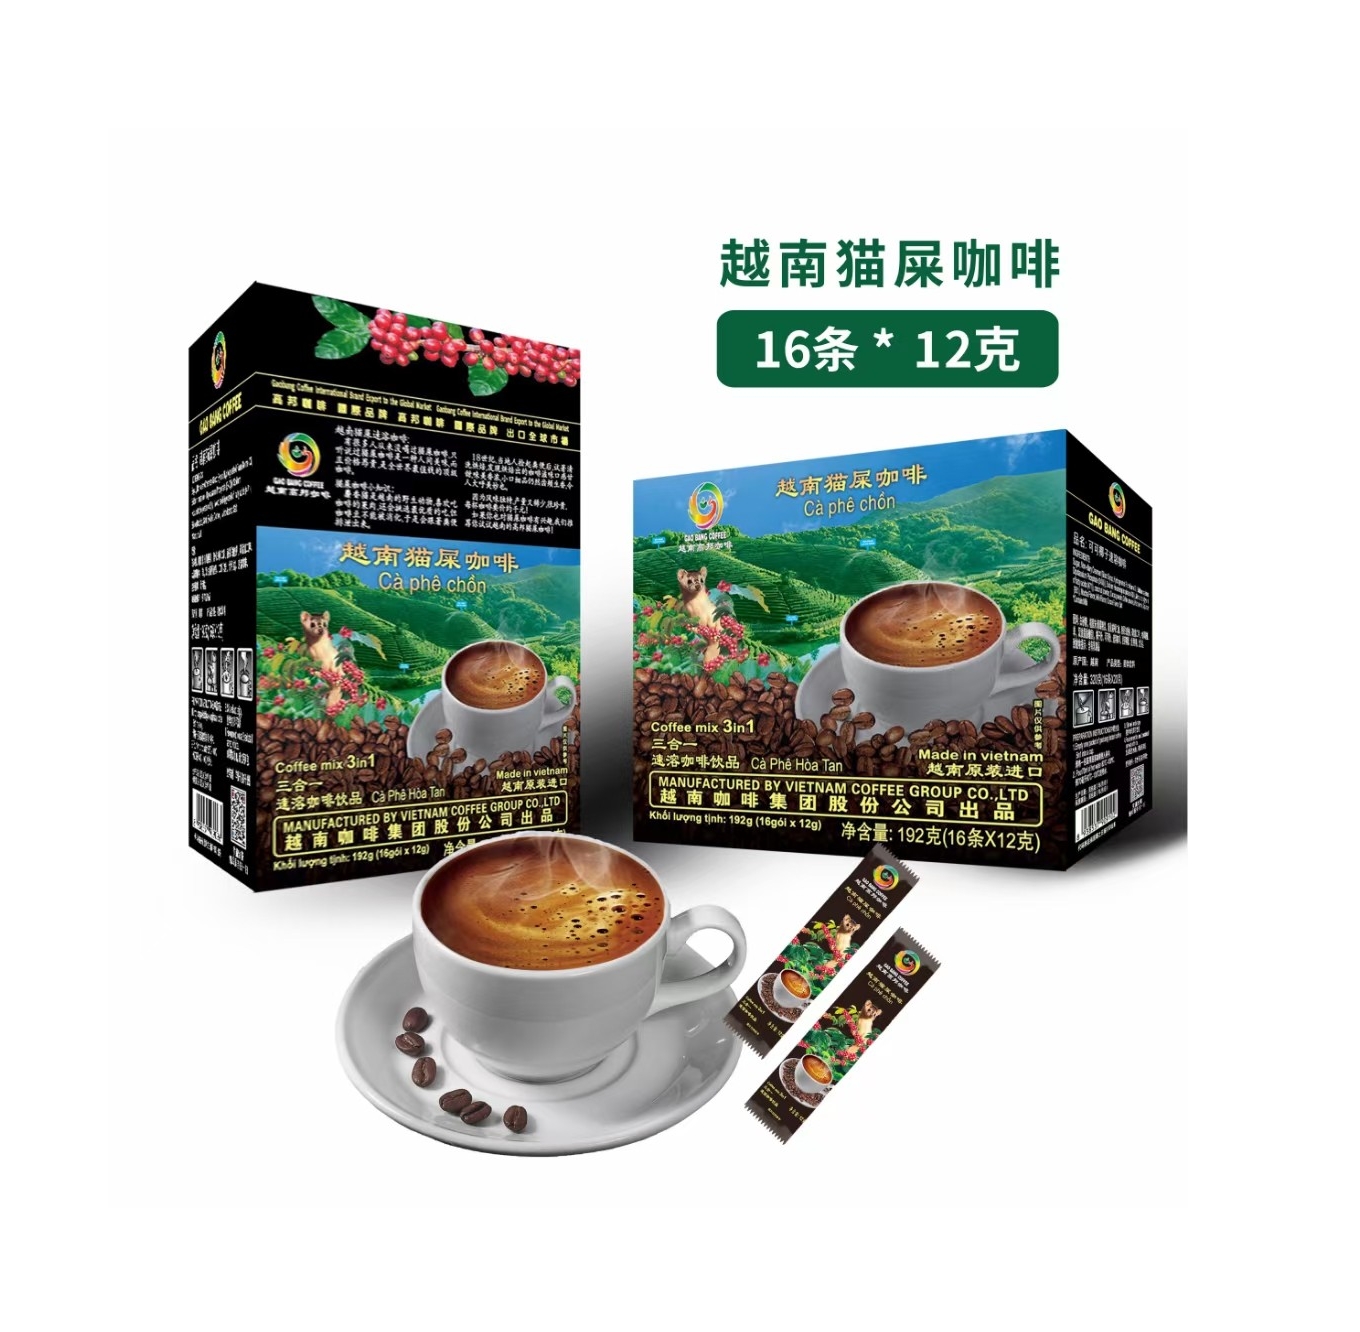 High Quality Gaobang 5in1 Coffee Instant Powder 16grams Vietnam